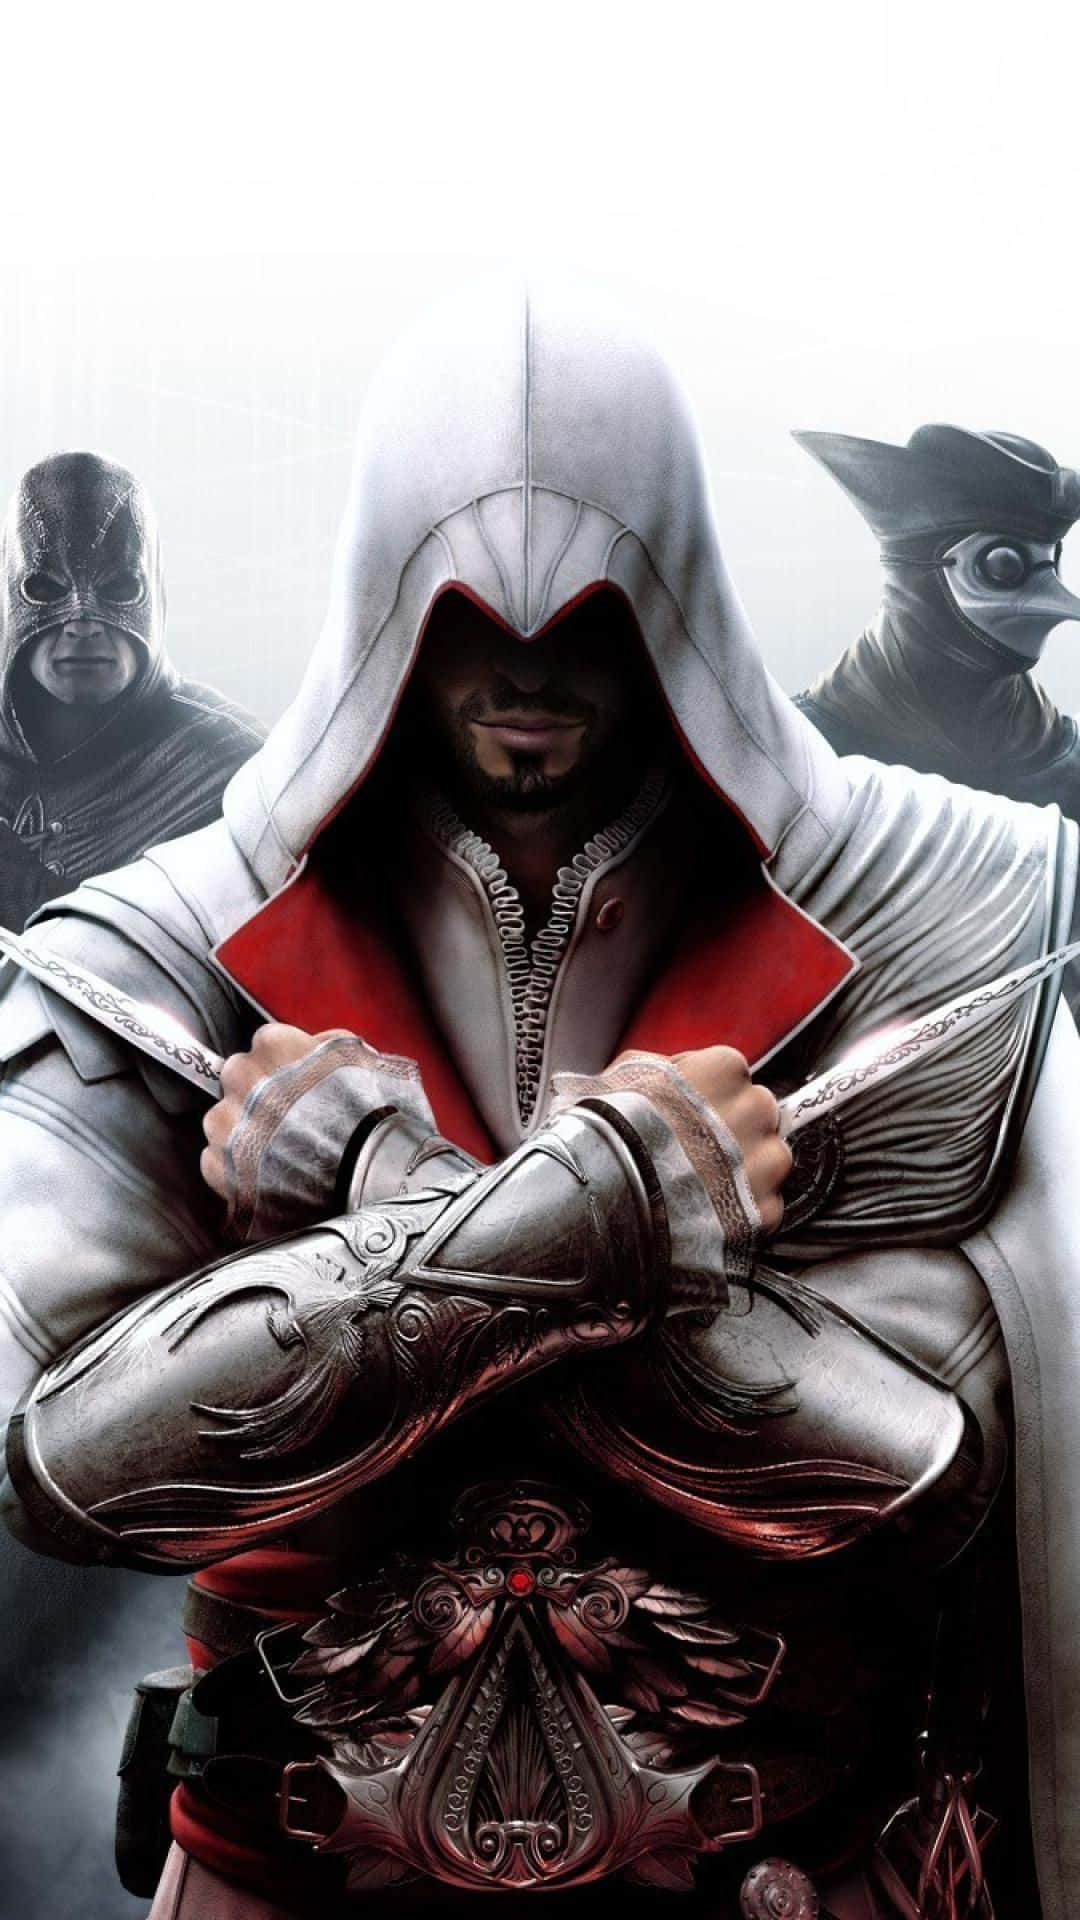 Captivating Assassin's Creed Brotherhood Scene Wallpaper